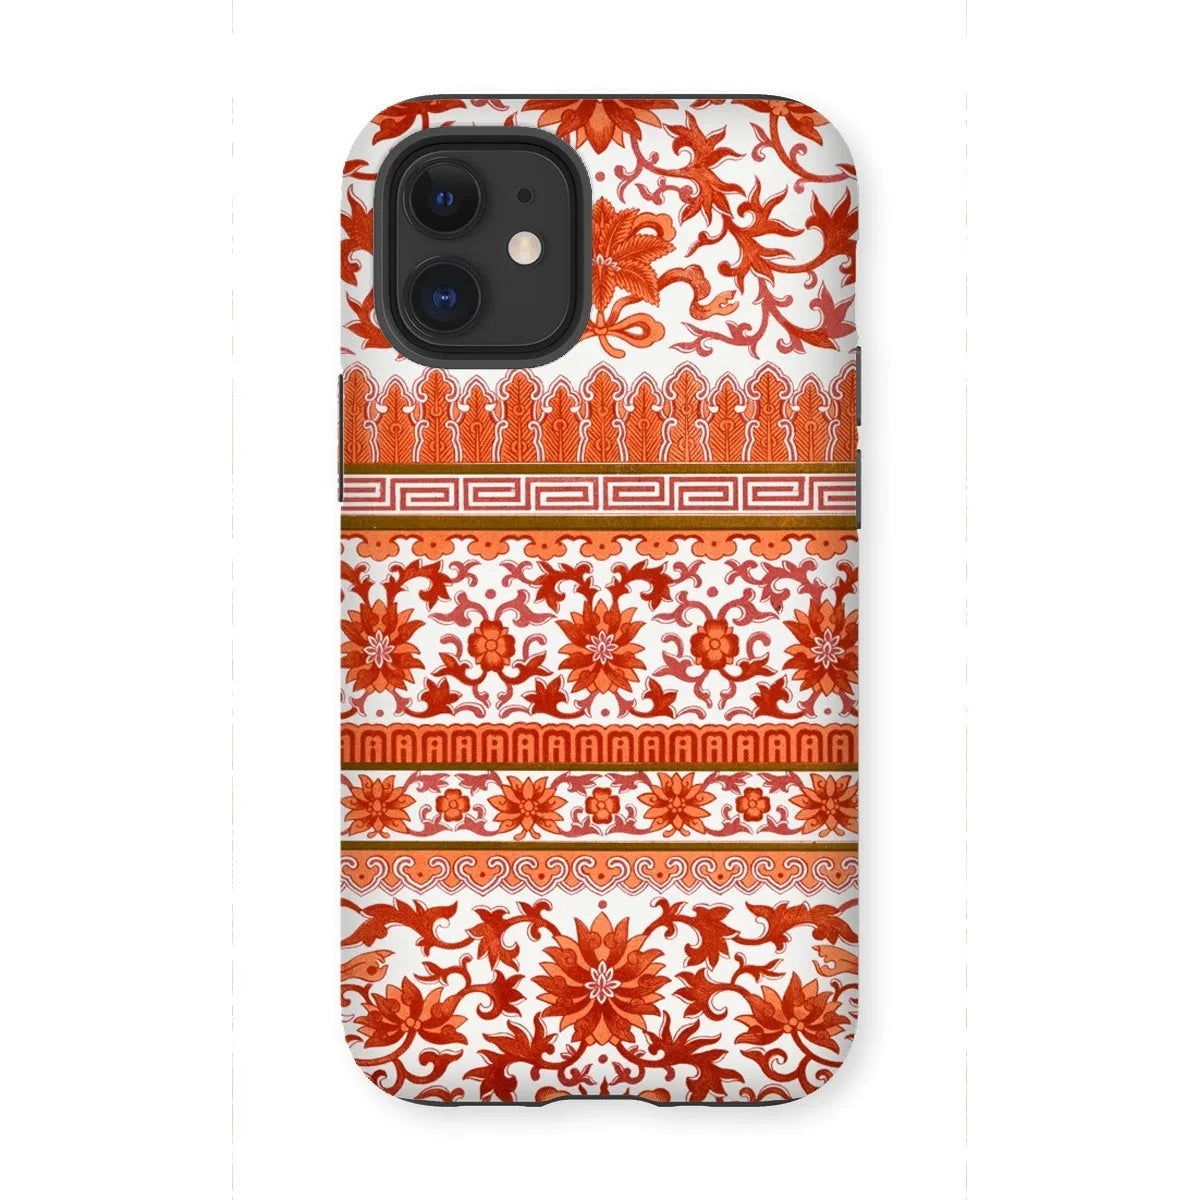 Fiery Chinese Floral Aesthetic Art Phone Case - Owen Jones - Iphone 12 Mini / Matte - Mobile Phone Cases - Aesthetic Art